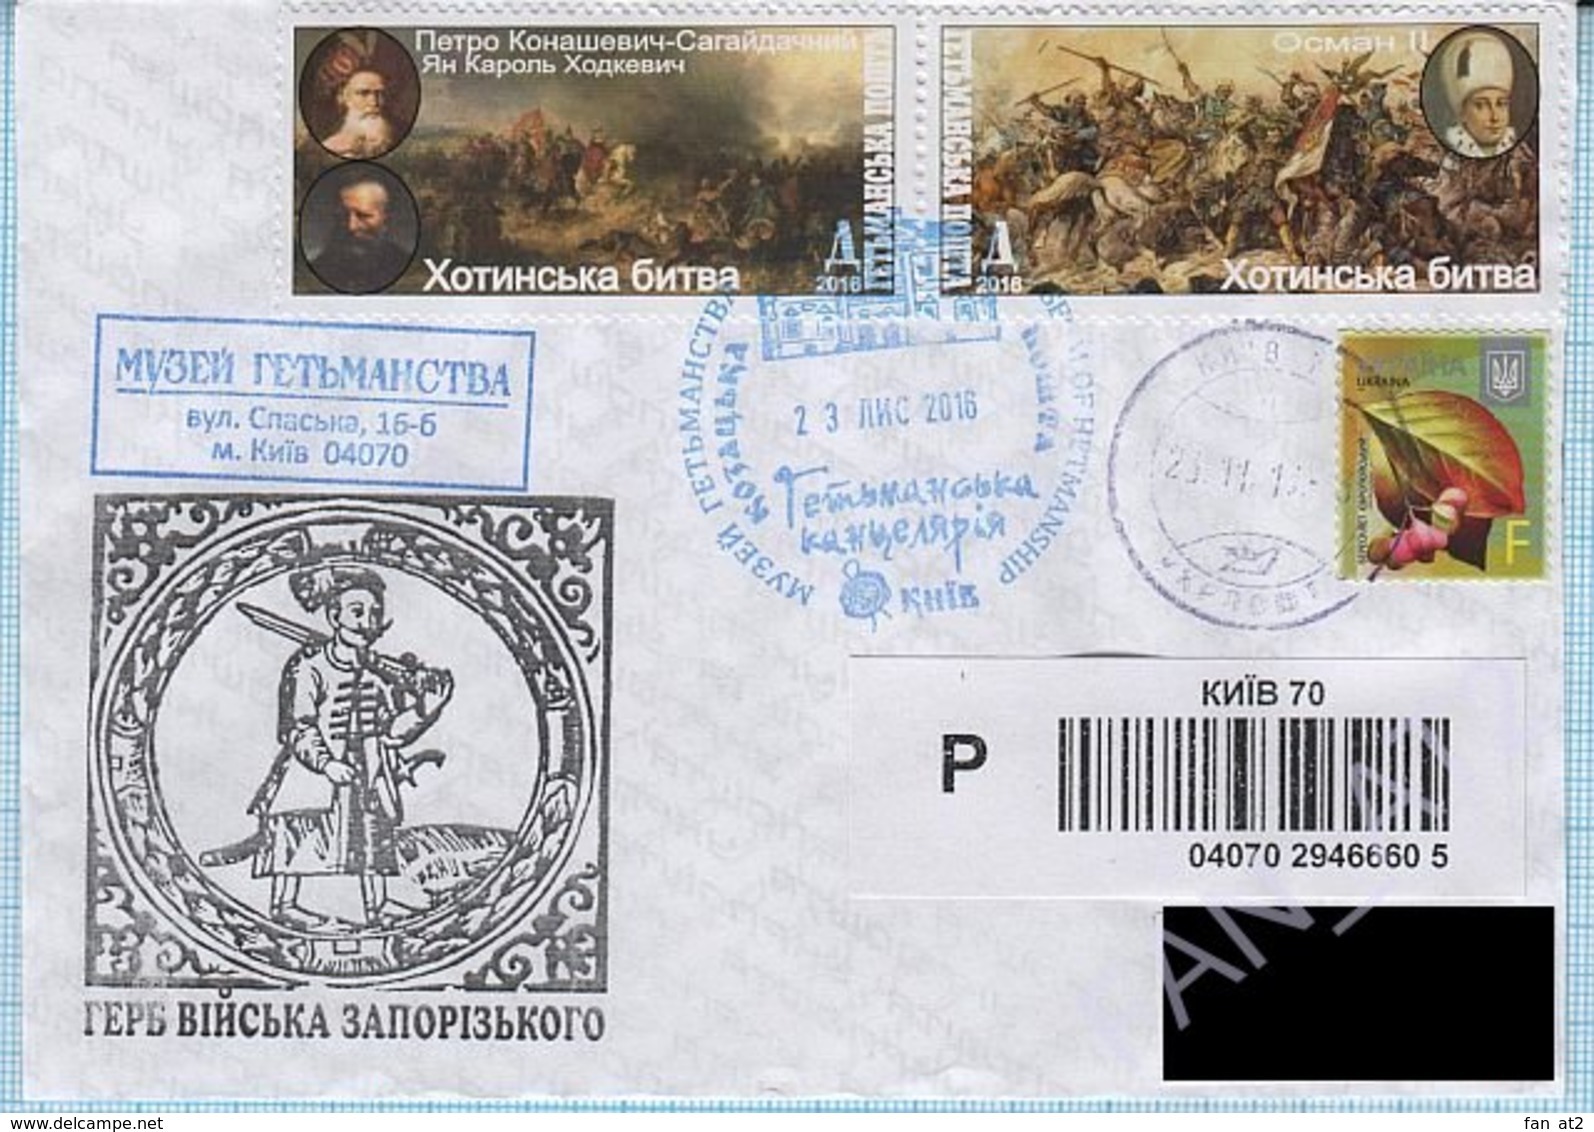 UKRAINE / Cover / Еnvelope Hetman Post. Hetman Museum. Khotyn Battle Cossacks. Kiev. Passed The Mail 2016 - Ukraine